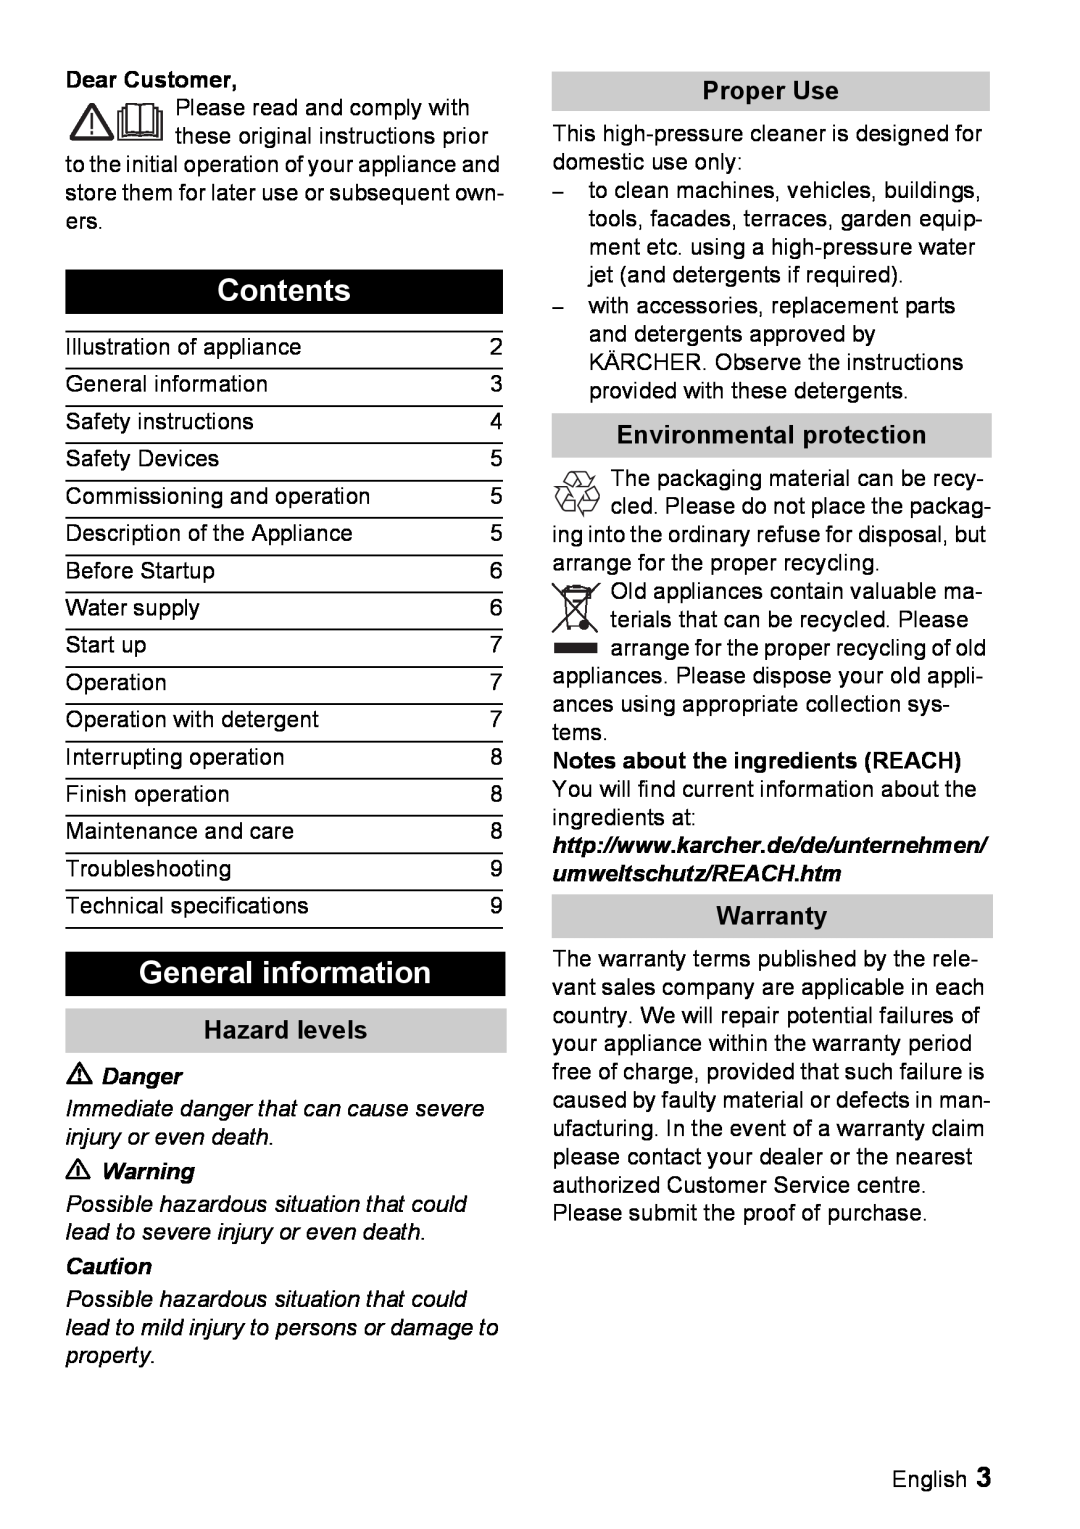 Karcher K 3.160 manual Contents, General information, Hazard levels, Proper Use, Environmental protection, Warranty, Danger 